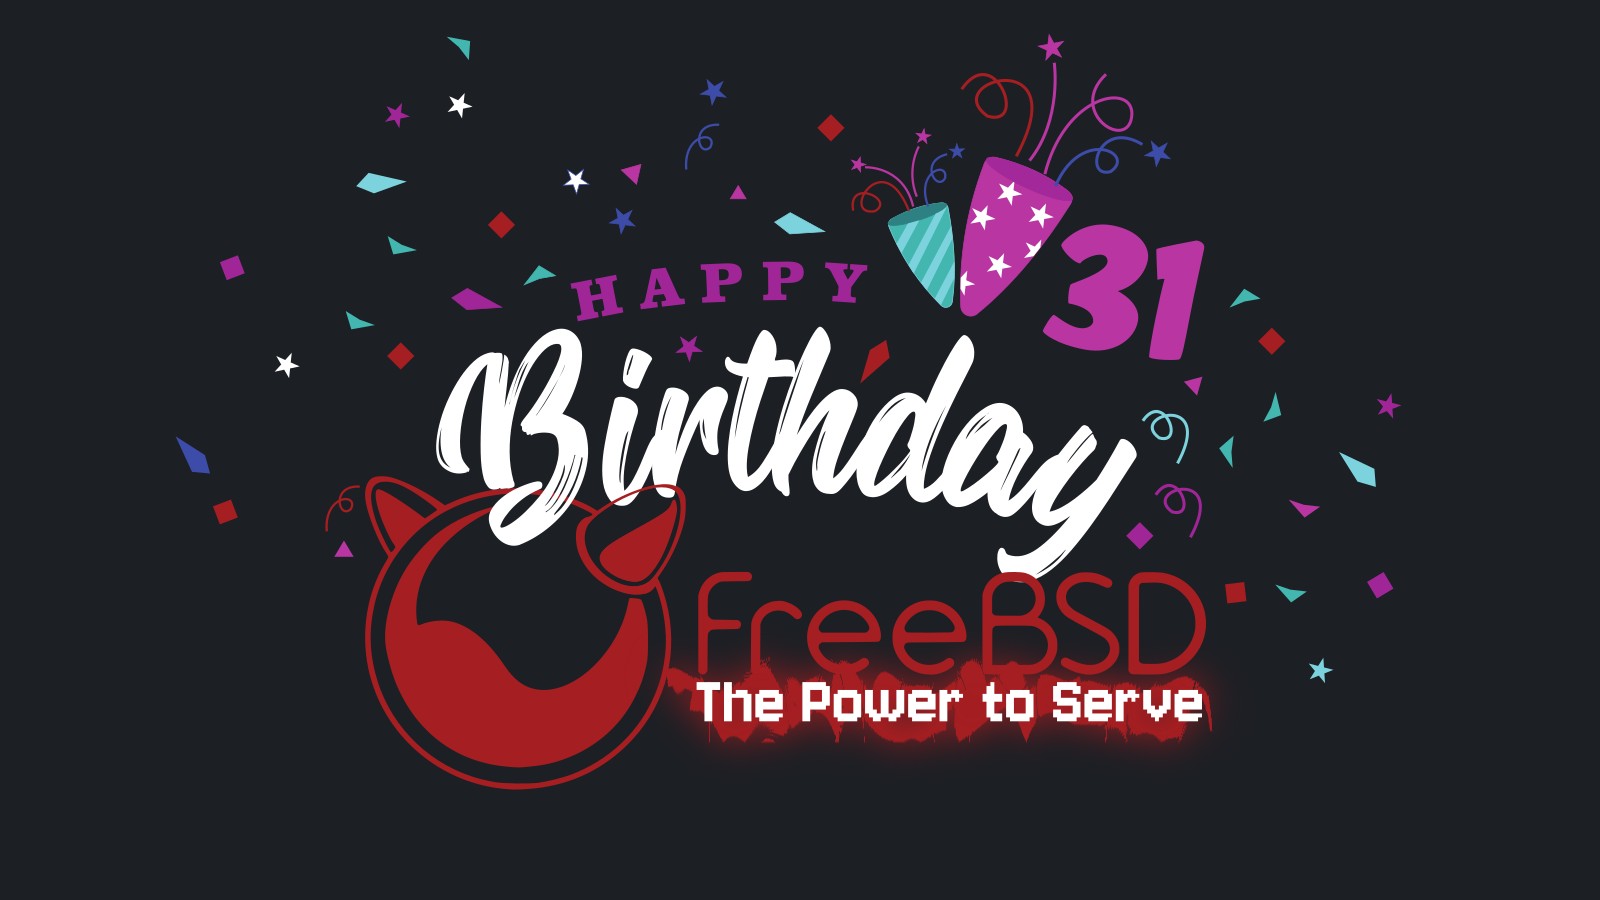 Happy 31st Birthday, FreeBSD!